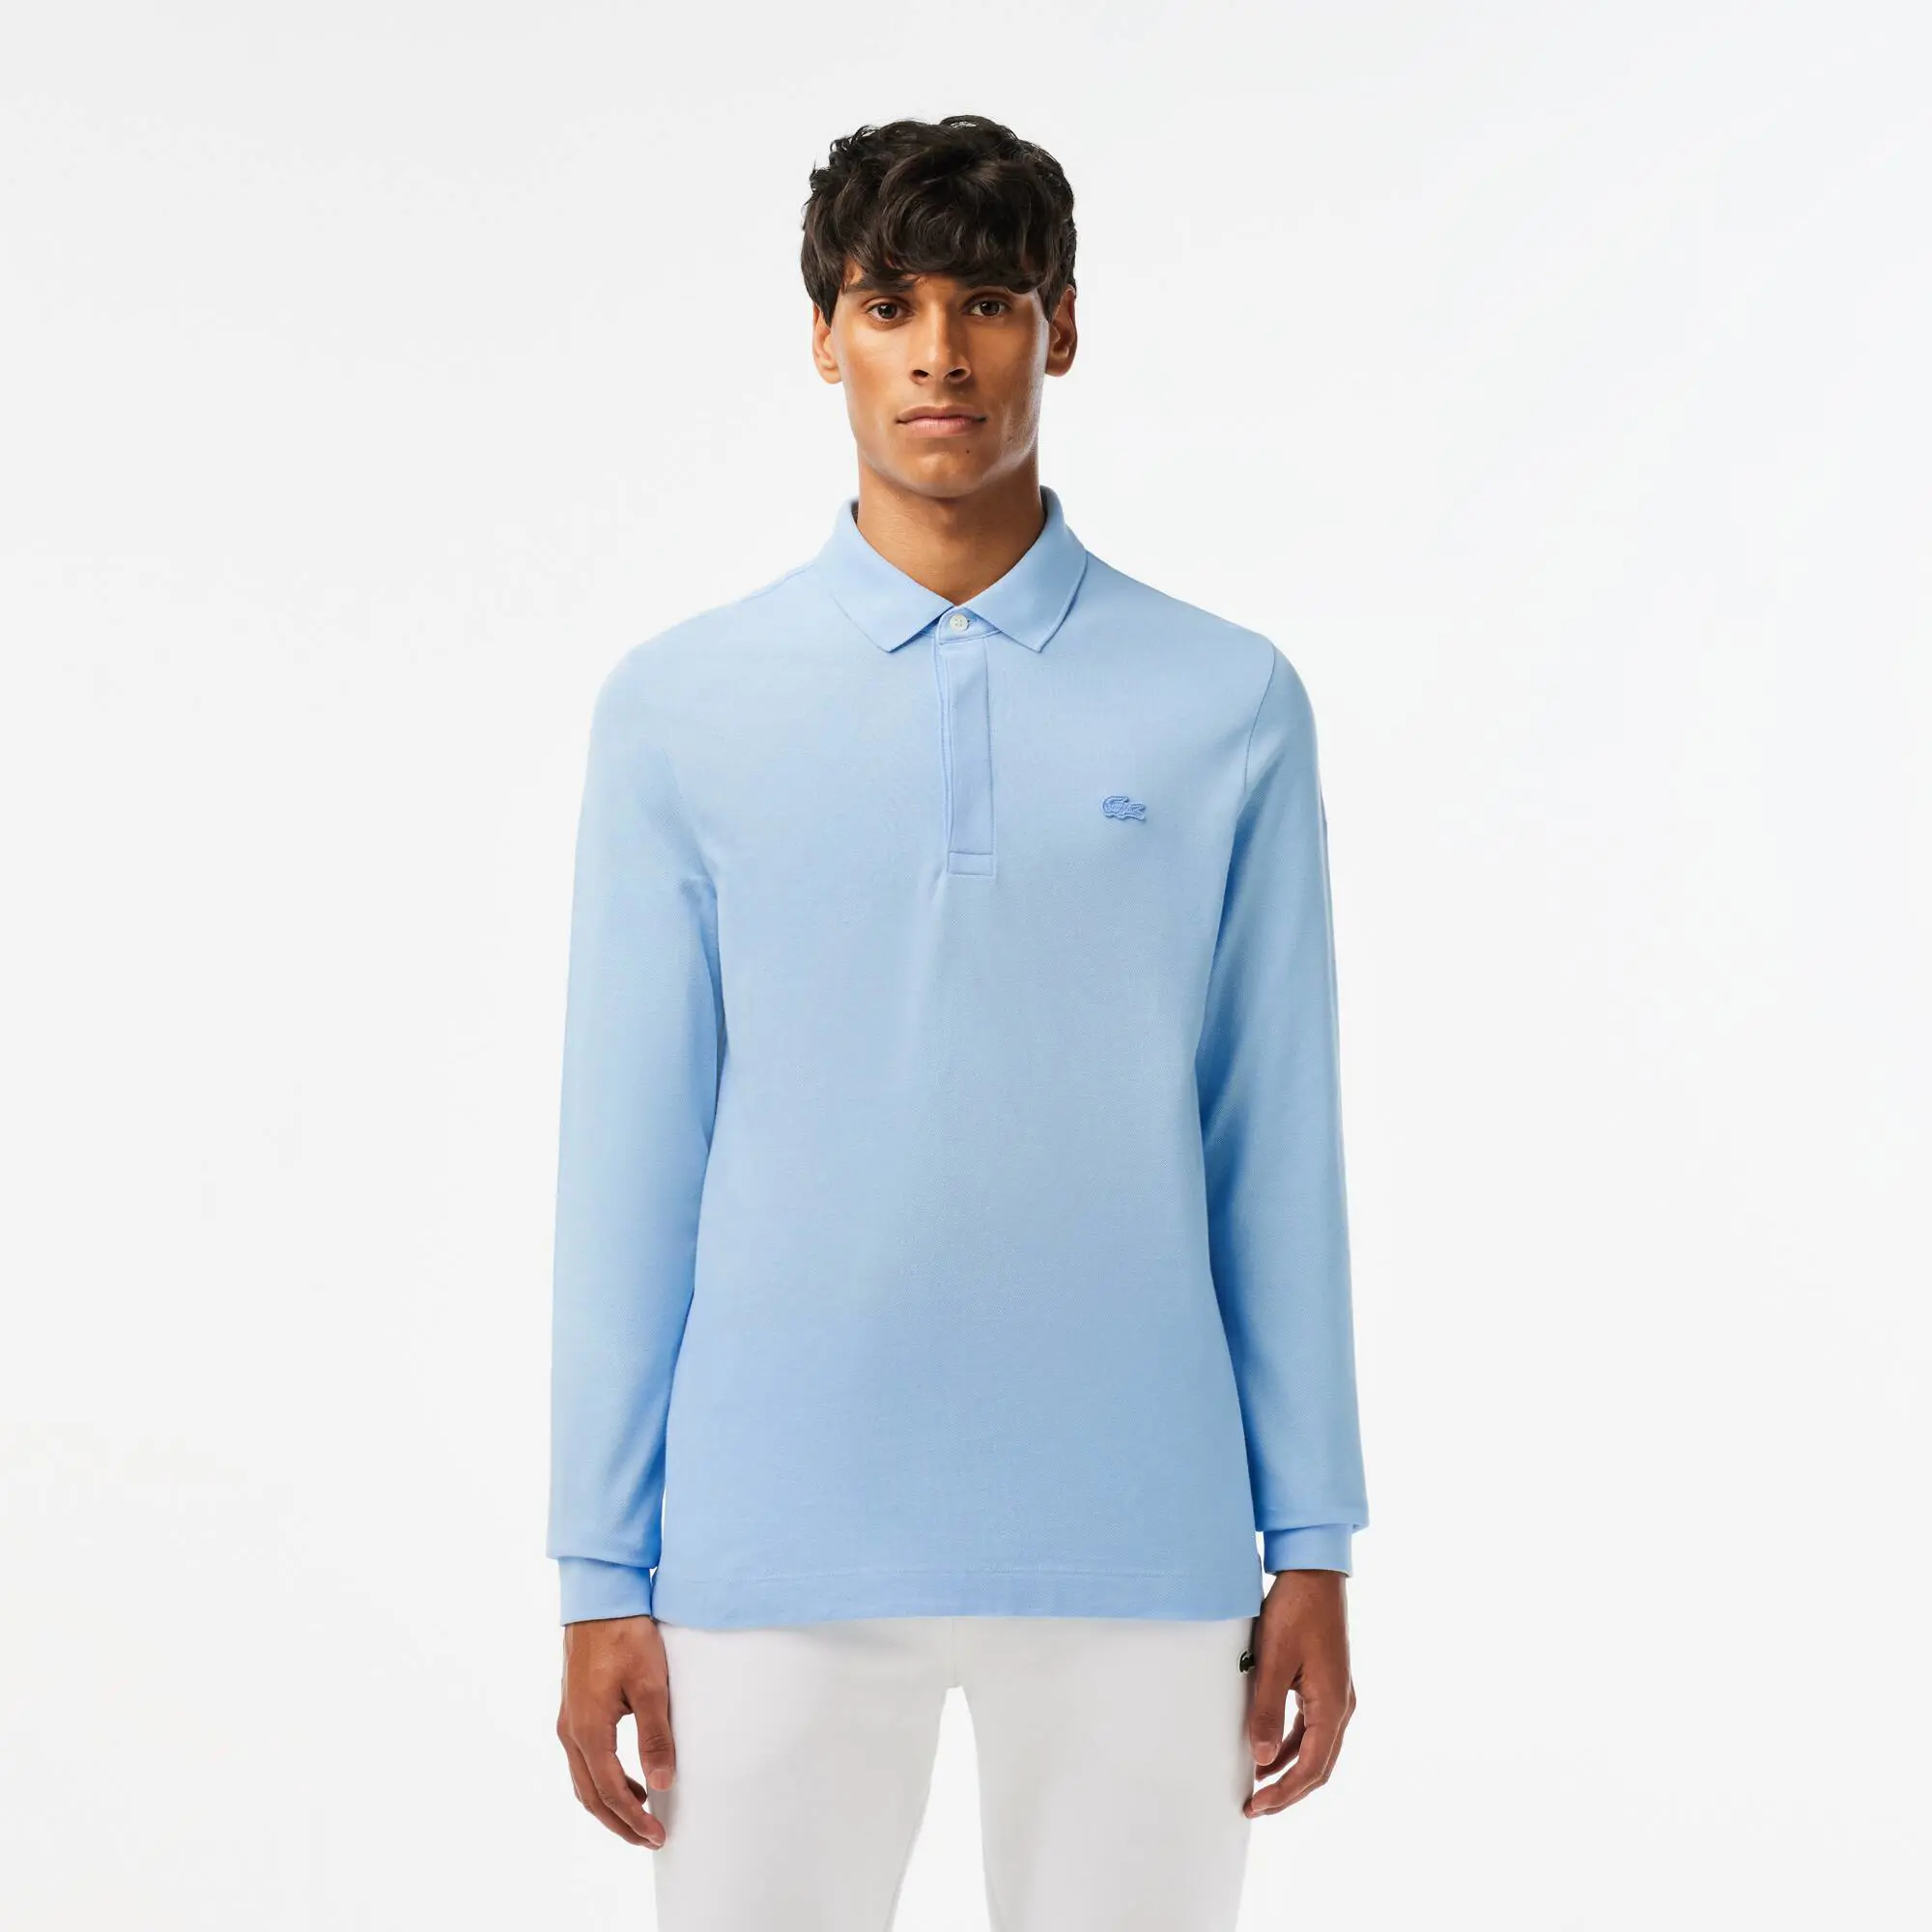 Lacoste Smart Paris long sleeve stretch cotton Polo Shirt. 1